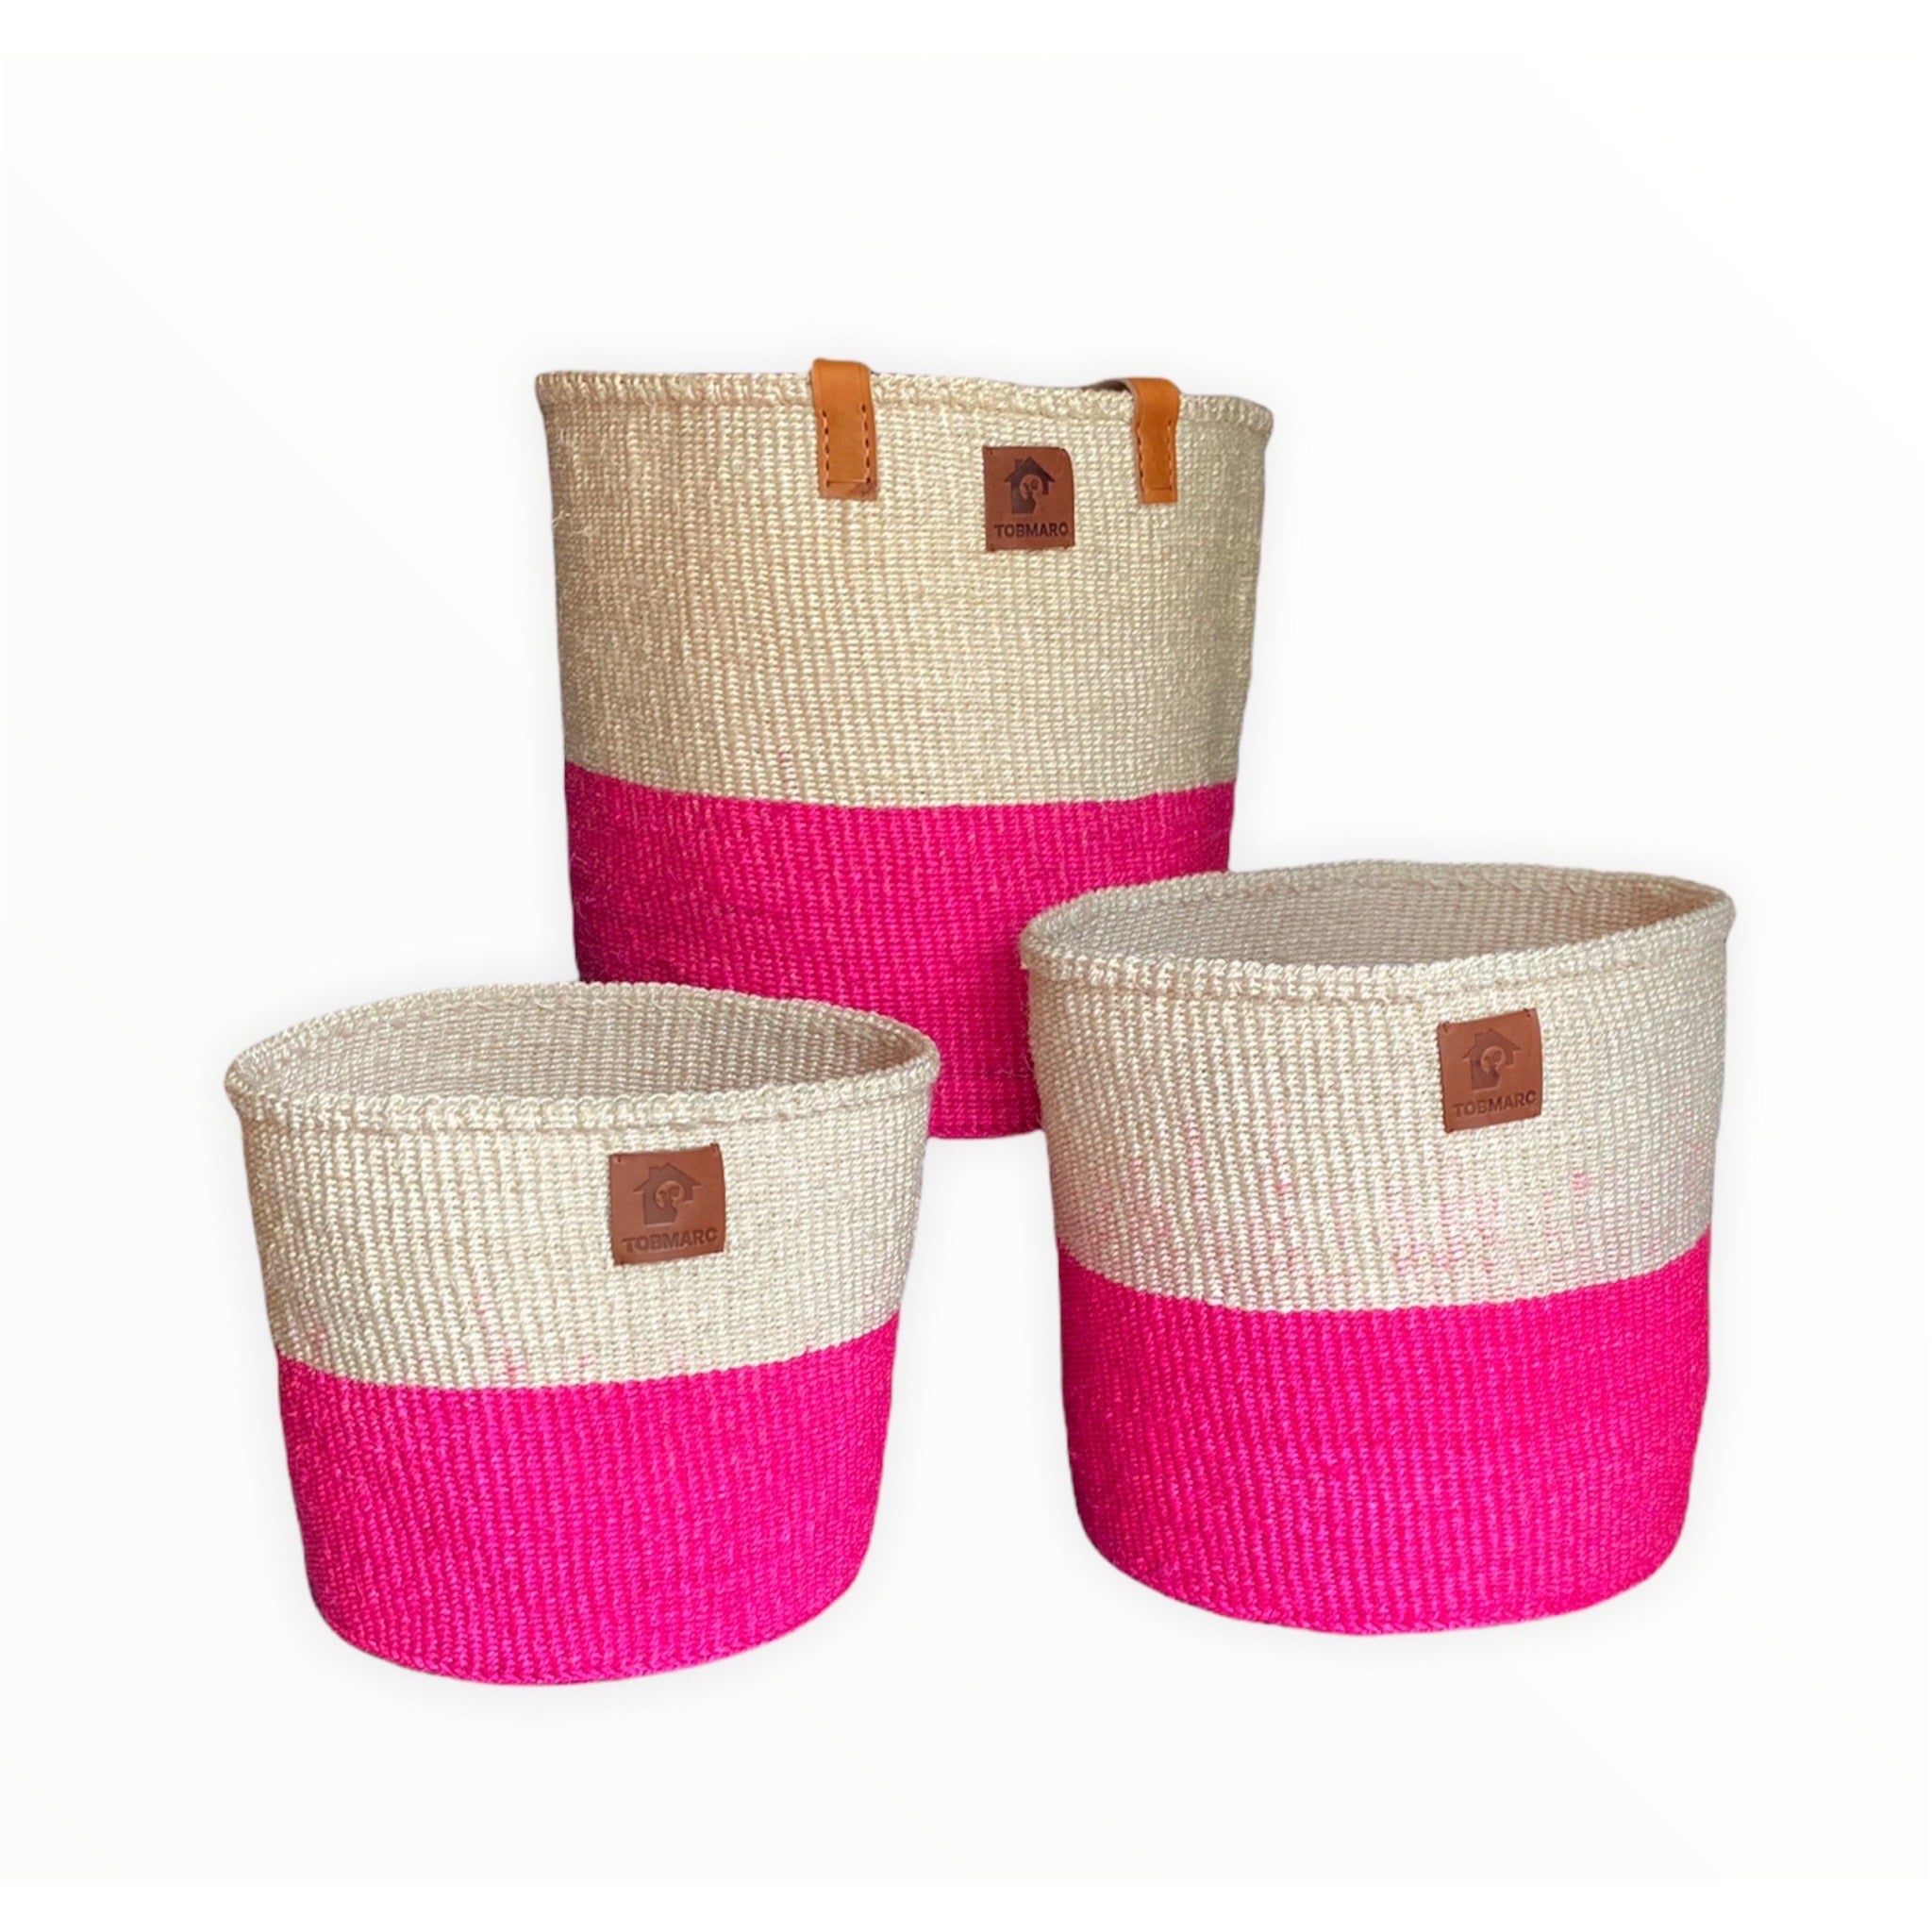 PINKSET3 -Storage basket|Woven Basket|Africa Baskets|Organizing Basket - Tobmarc Home Decor & Gifts 